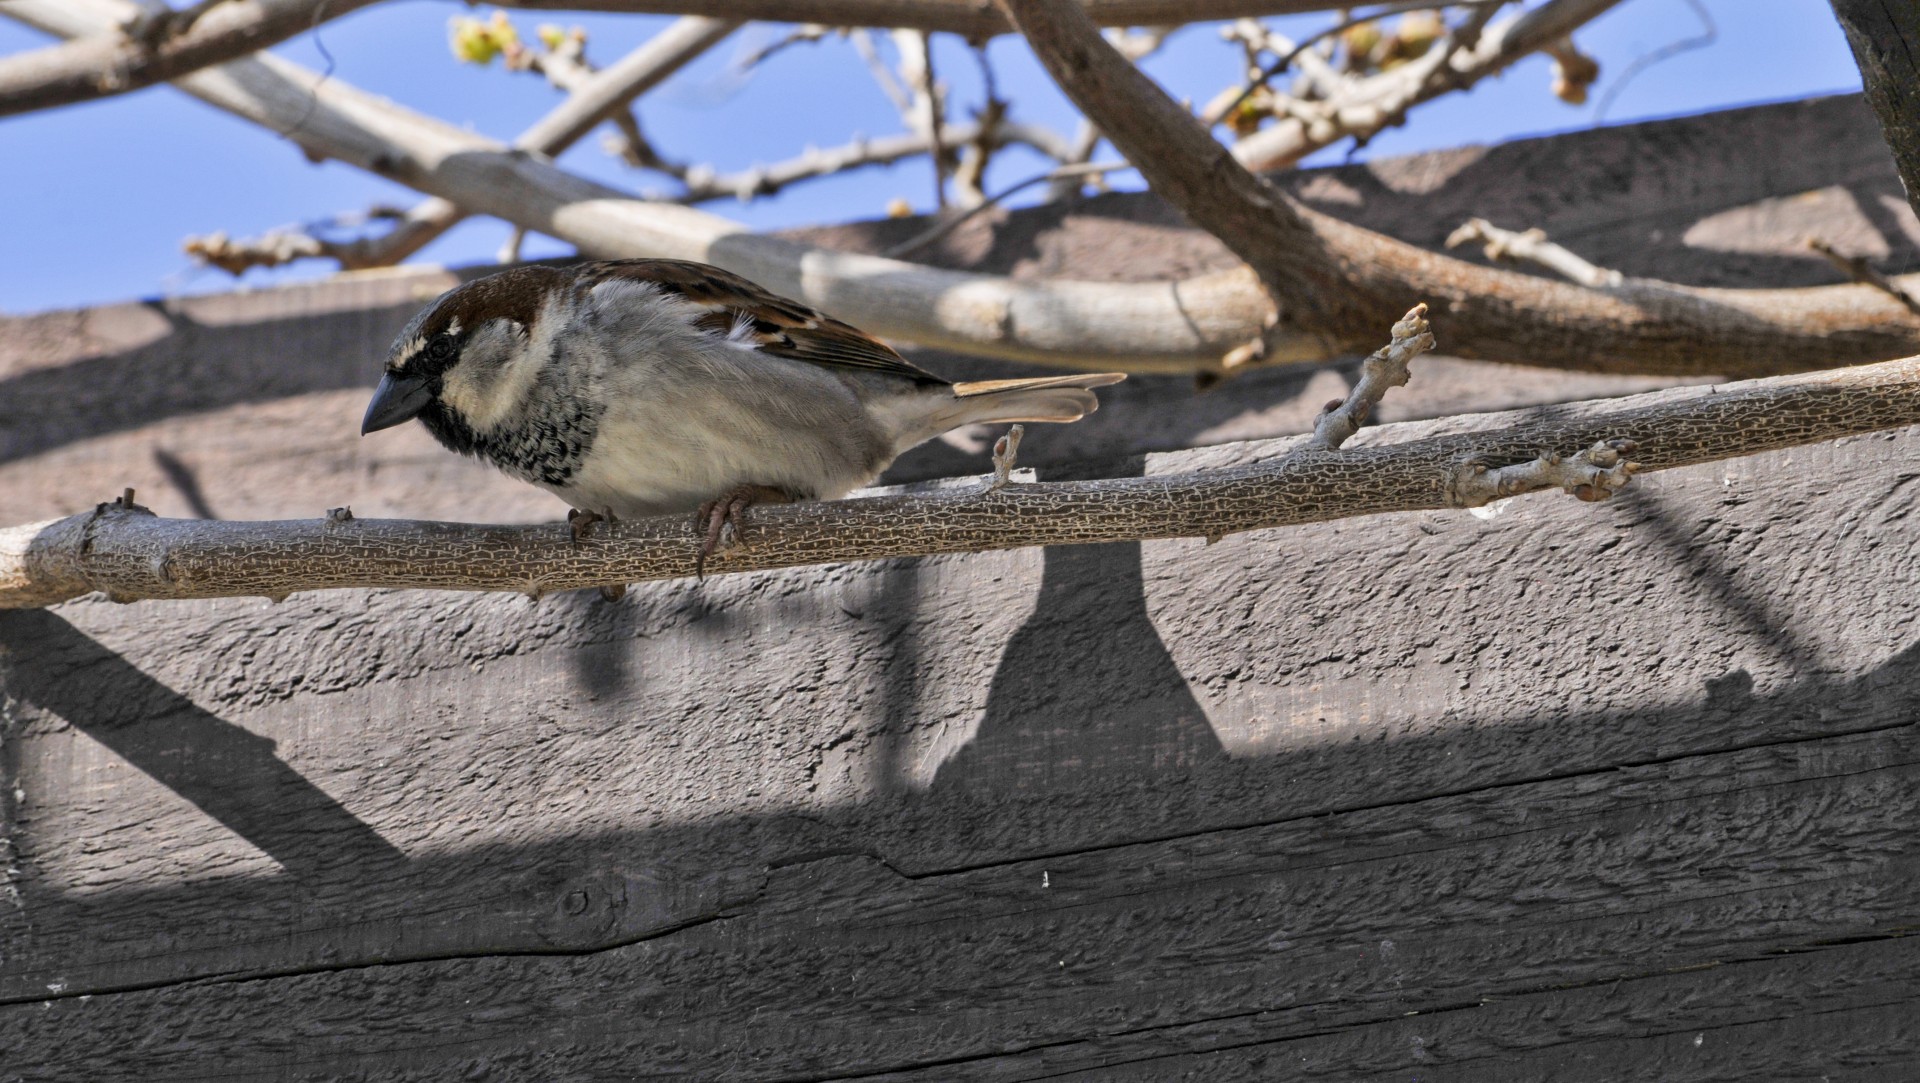 sparrow bird feathers free photo